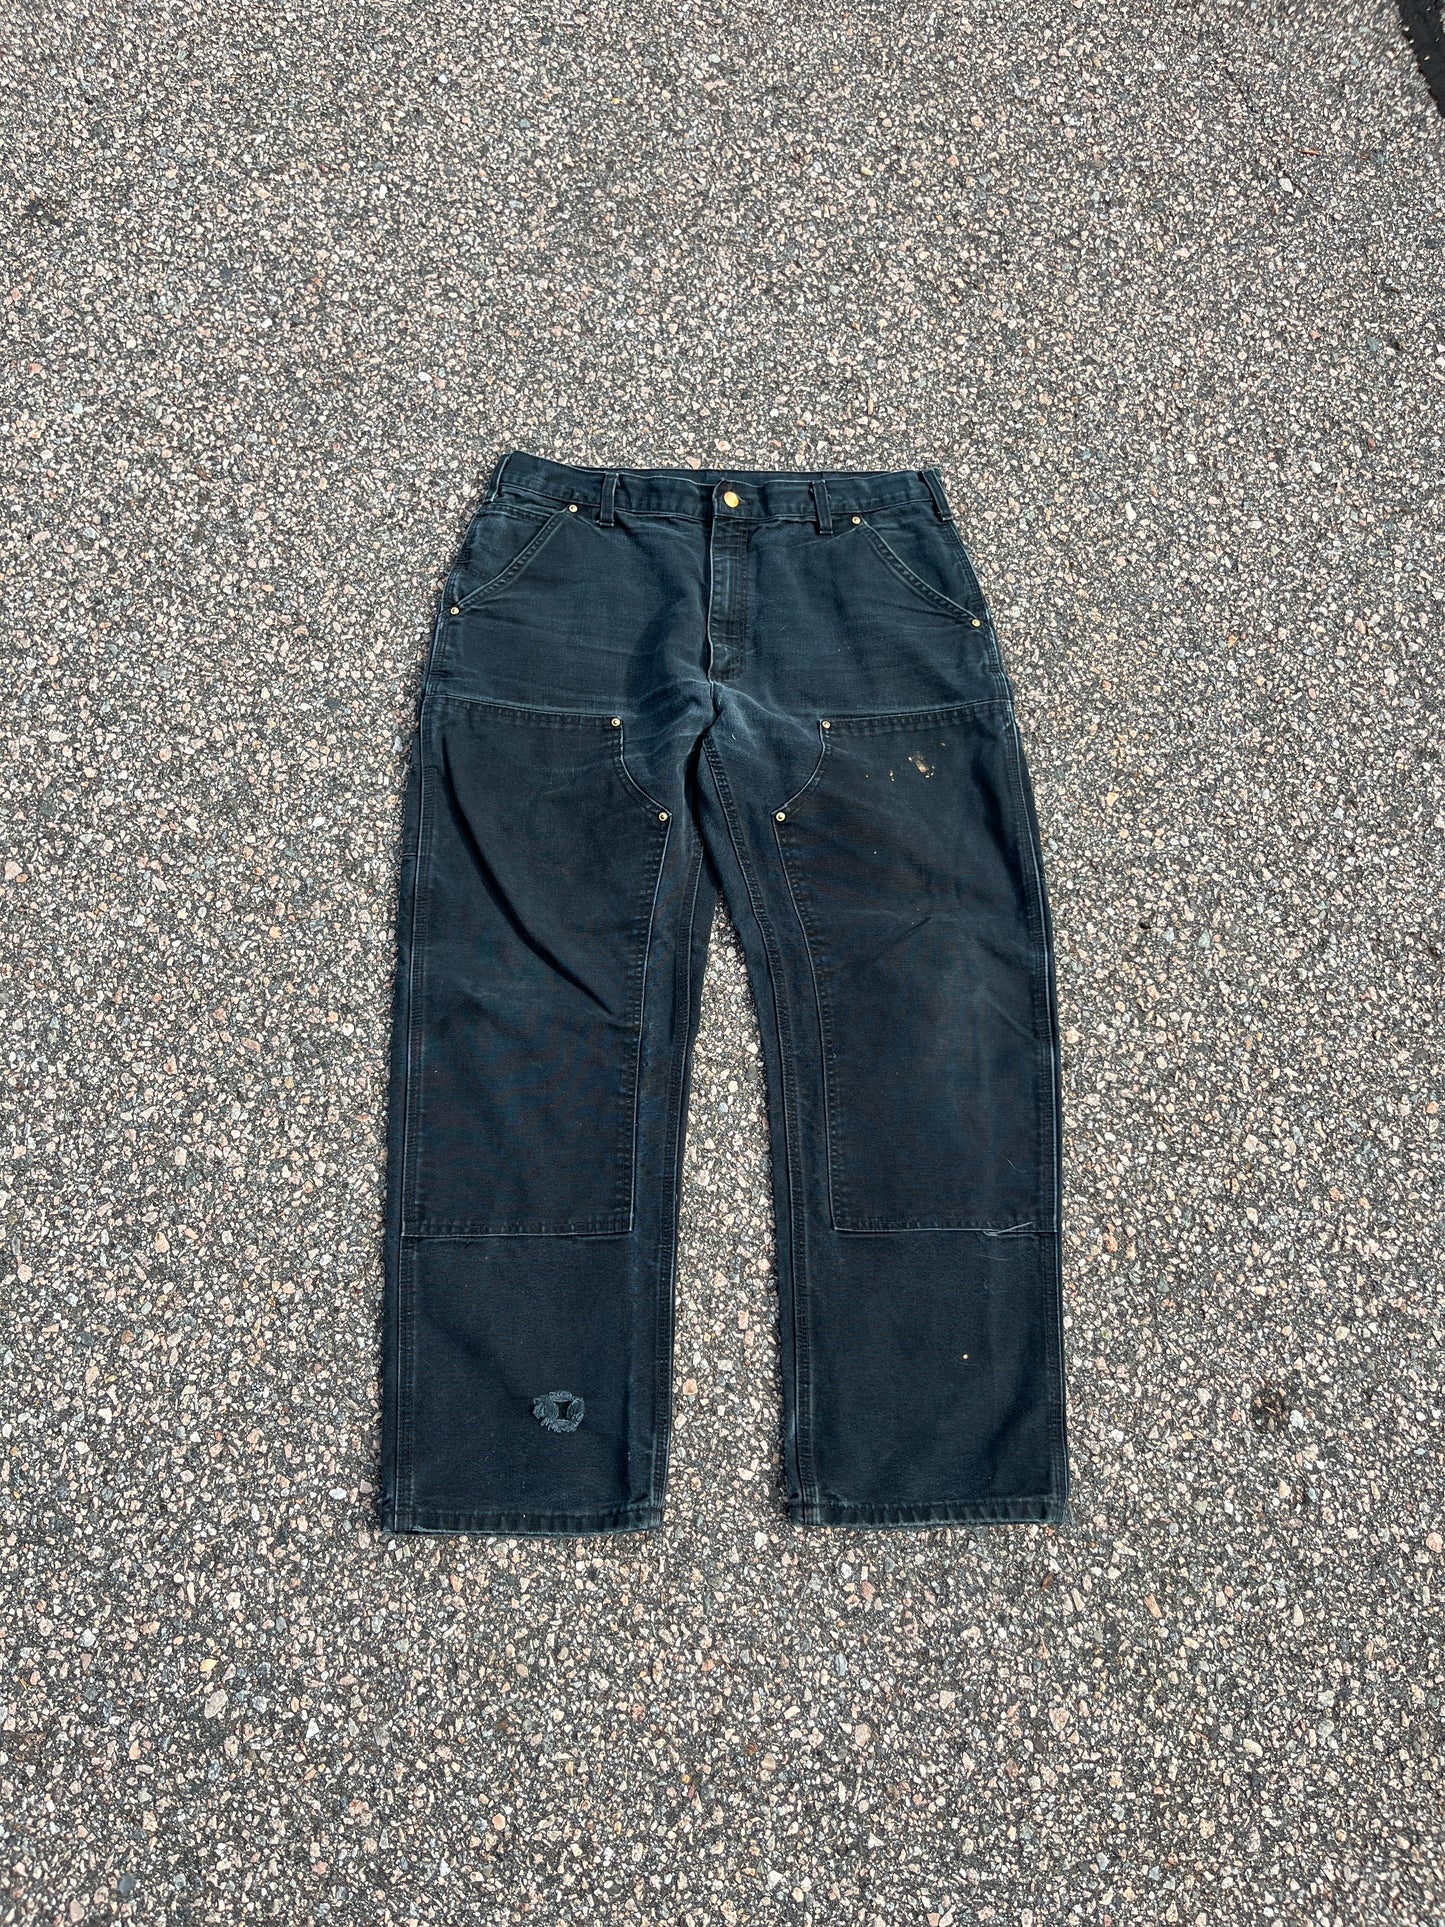 Faded Black Carhartt Double Knee Pants - 35 x 29